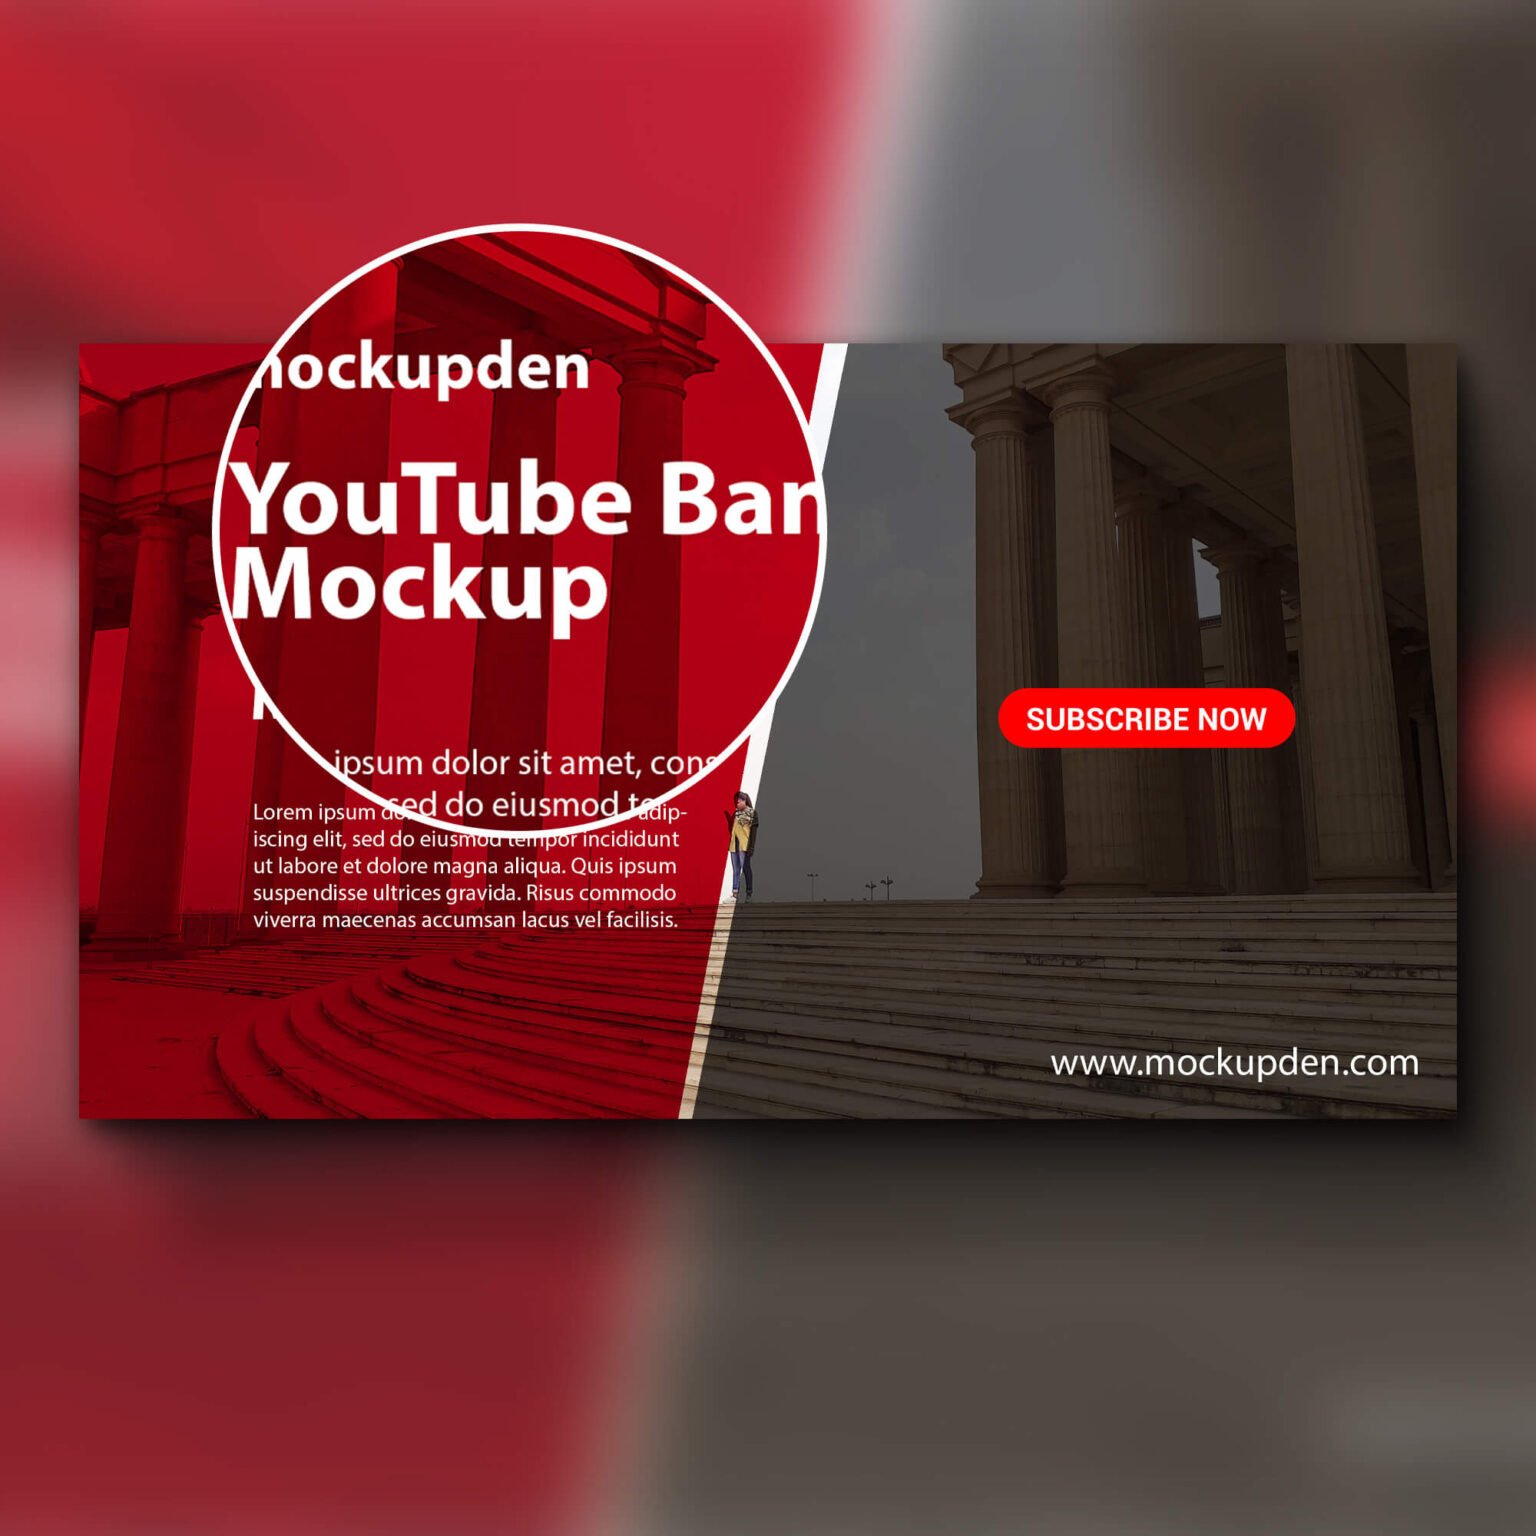 Download Free YouTube Banner Mockup PSD Template - Mockup Den